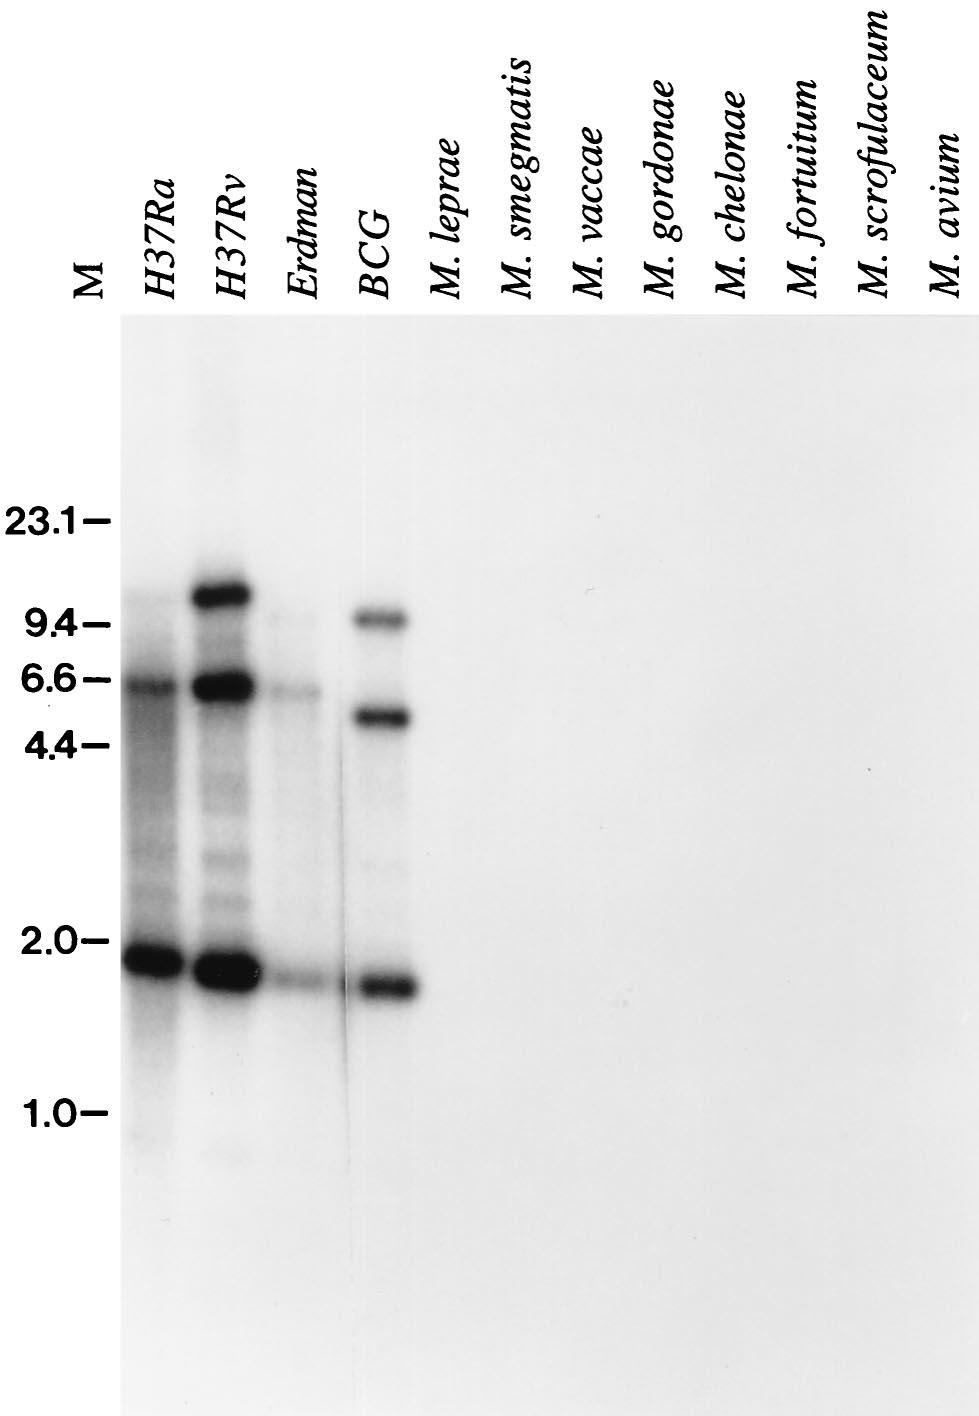 2944 DILLON ET AL. INFECT. IMMUN. FIG. 3. Southern blot analysis of mtb39 genes. Genomic DNA (2.